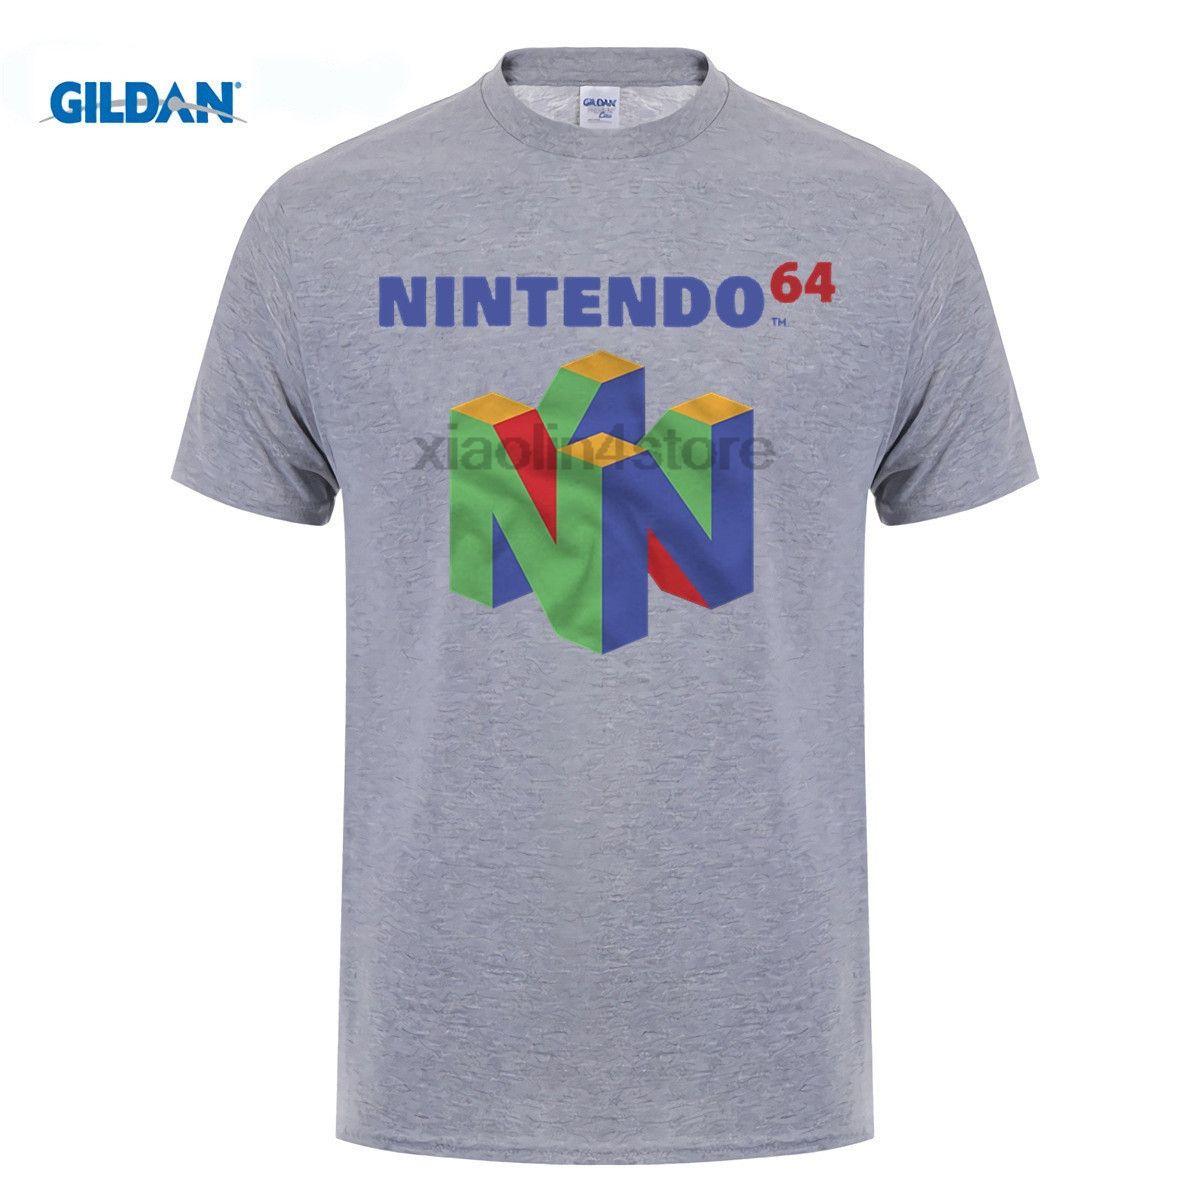 An L Clothing and Apparel Logo - GILDAN N64 Logo Apparel T Shirt L Black Casual Plus Size T Shirts ...